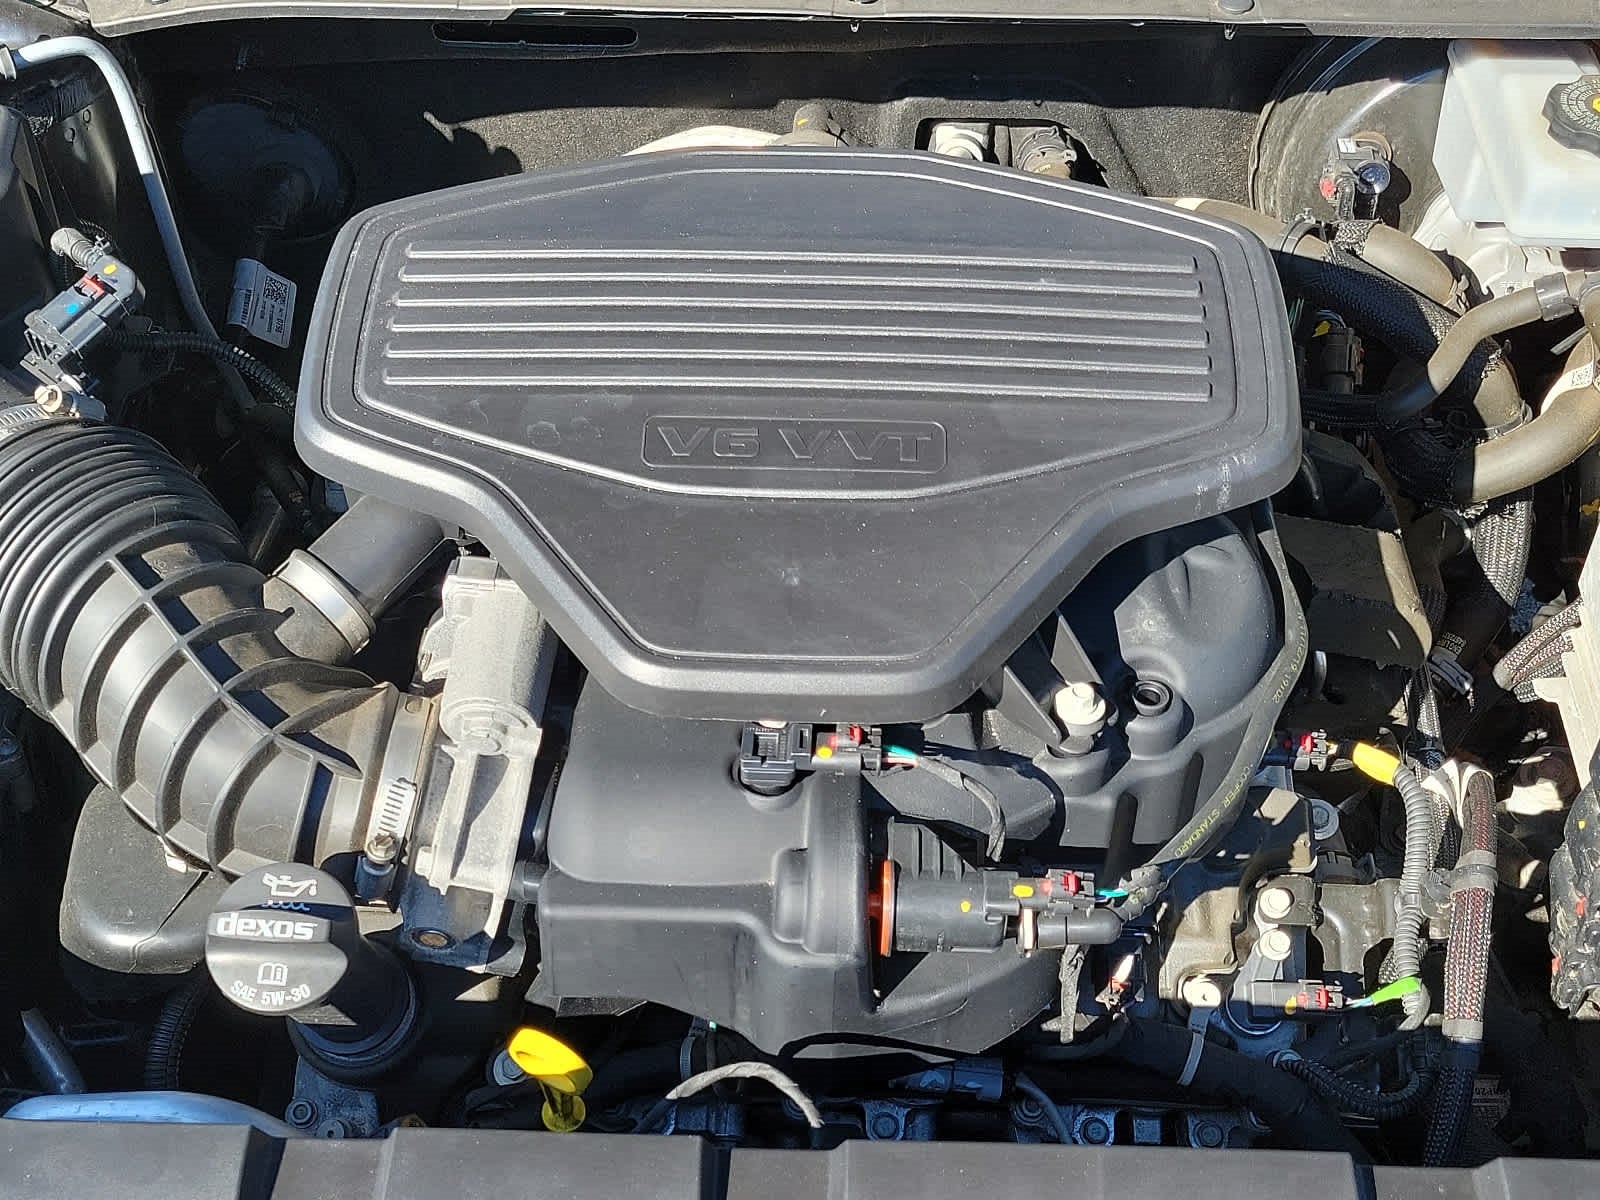 2020 Chevrolet Blazer AWD 4dr LT w/3LT